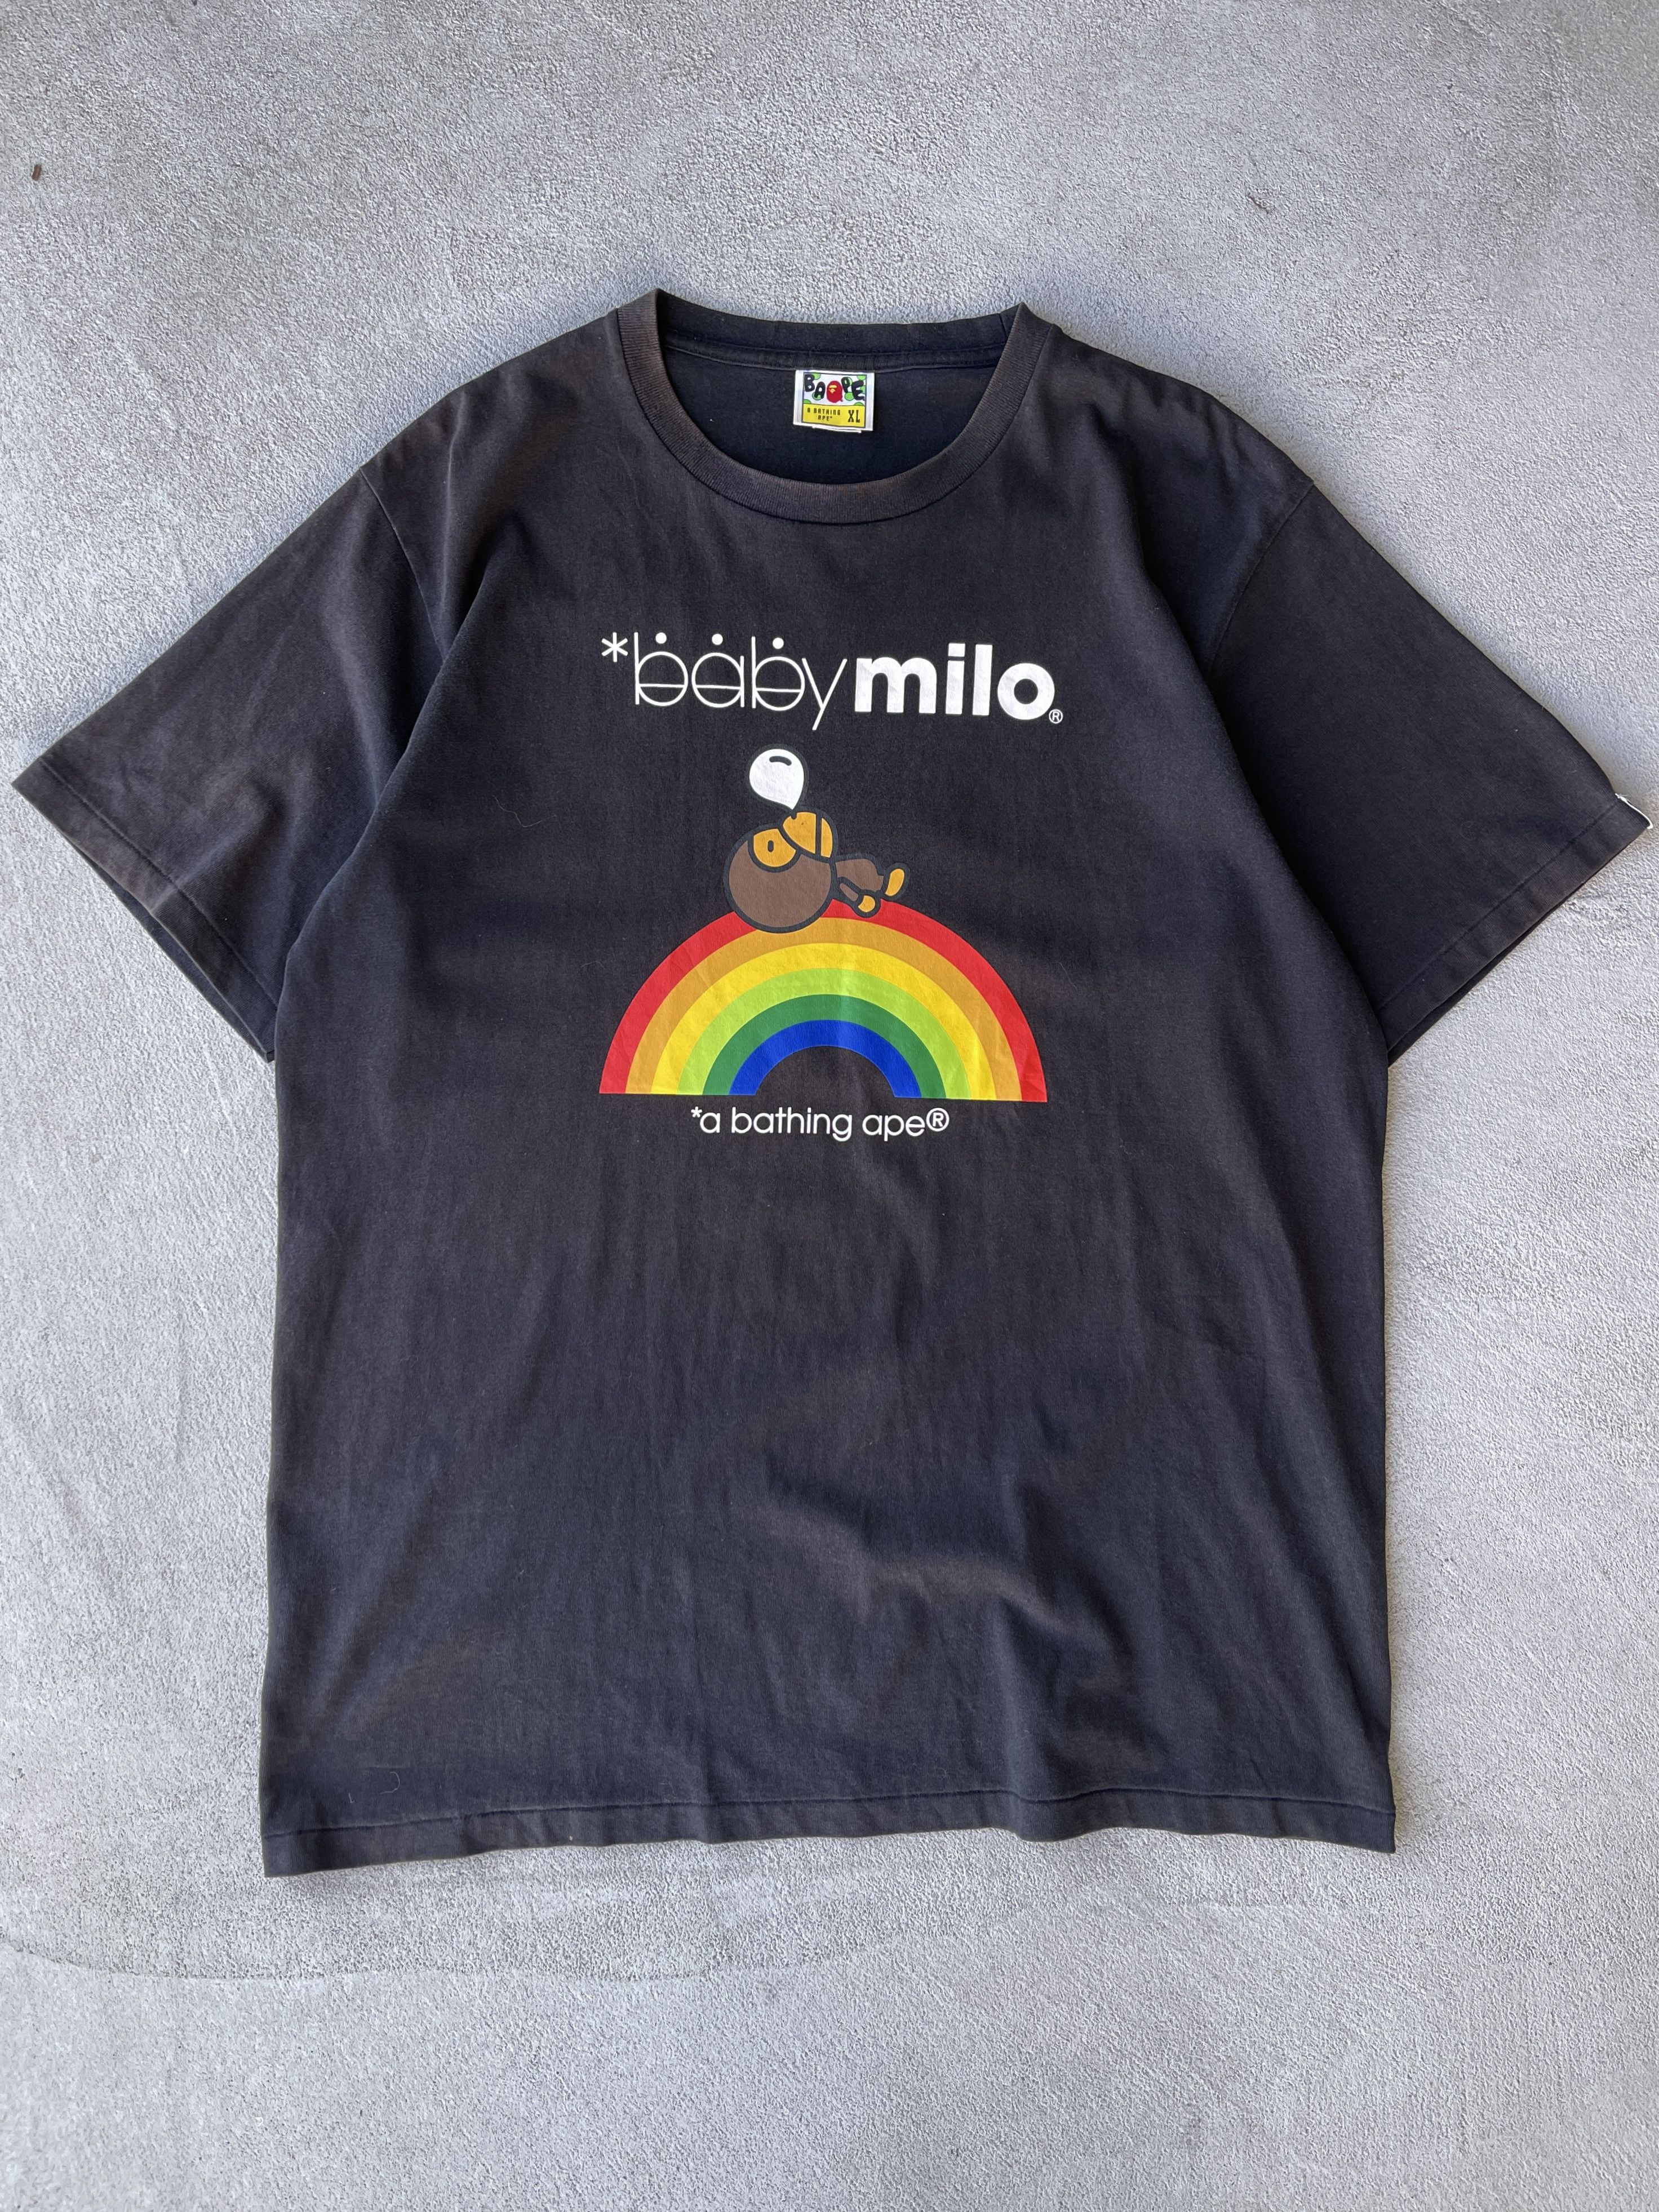 Bape Baby Milo Napping on Rainbow Tee (XL) - 1